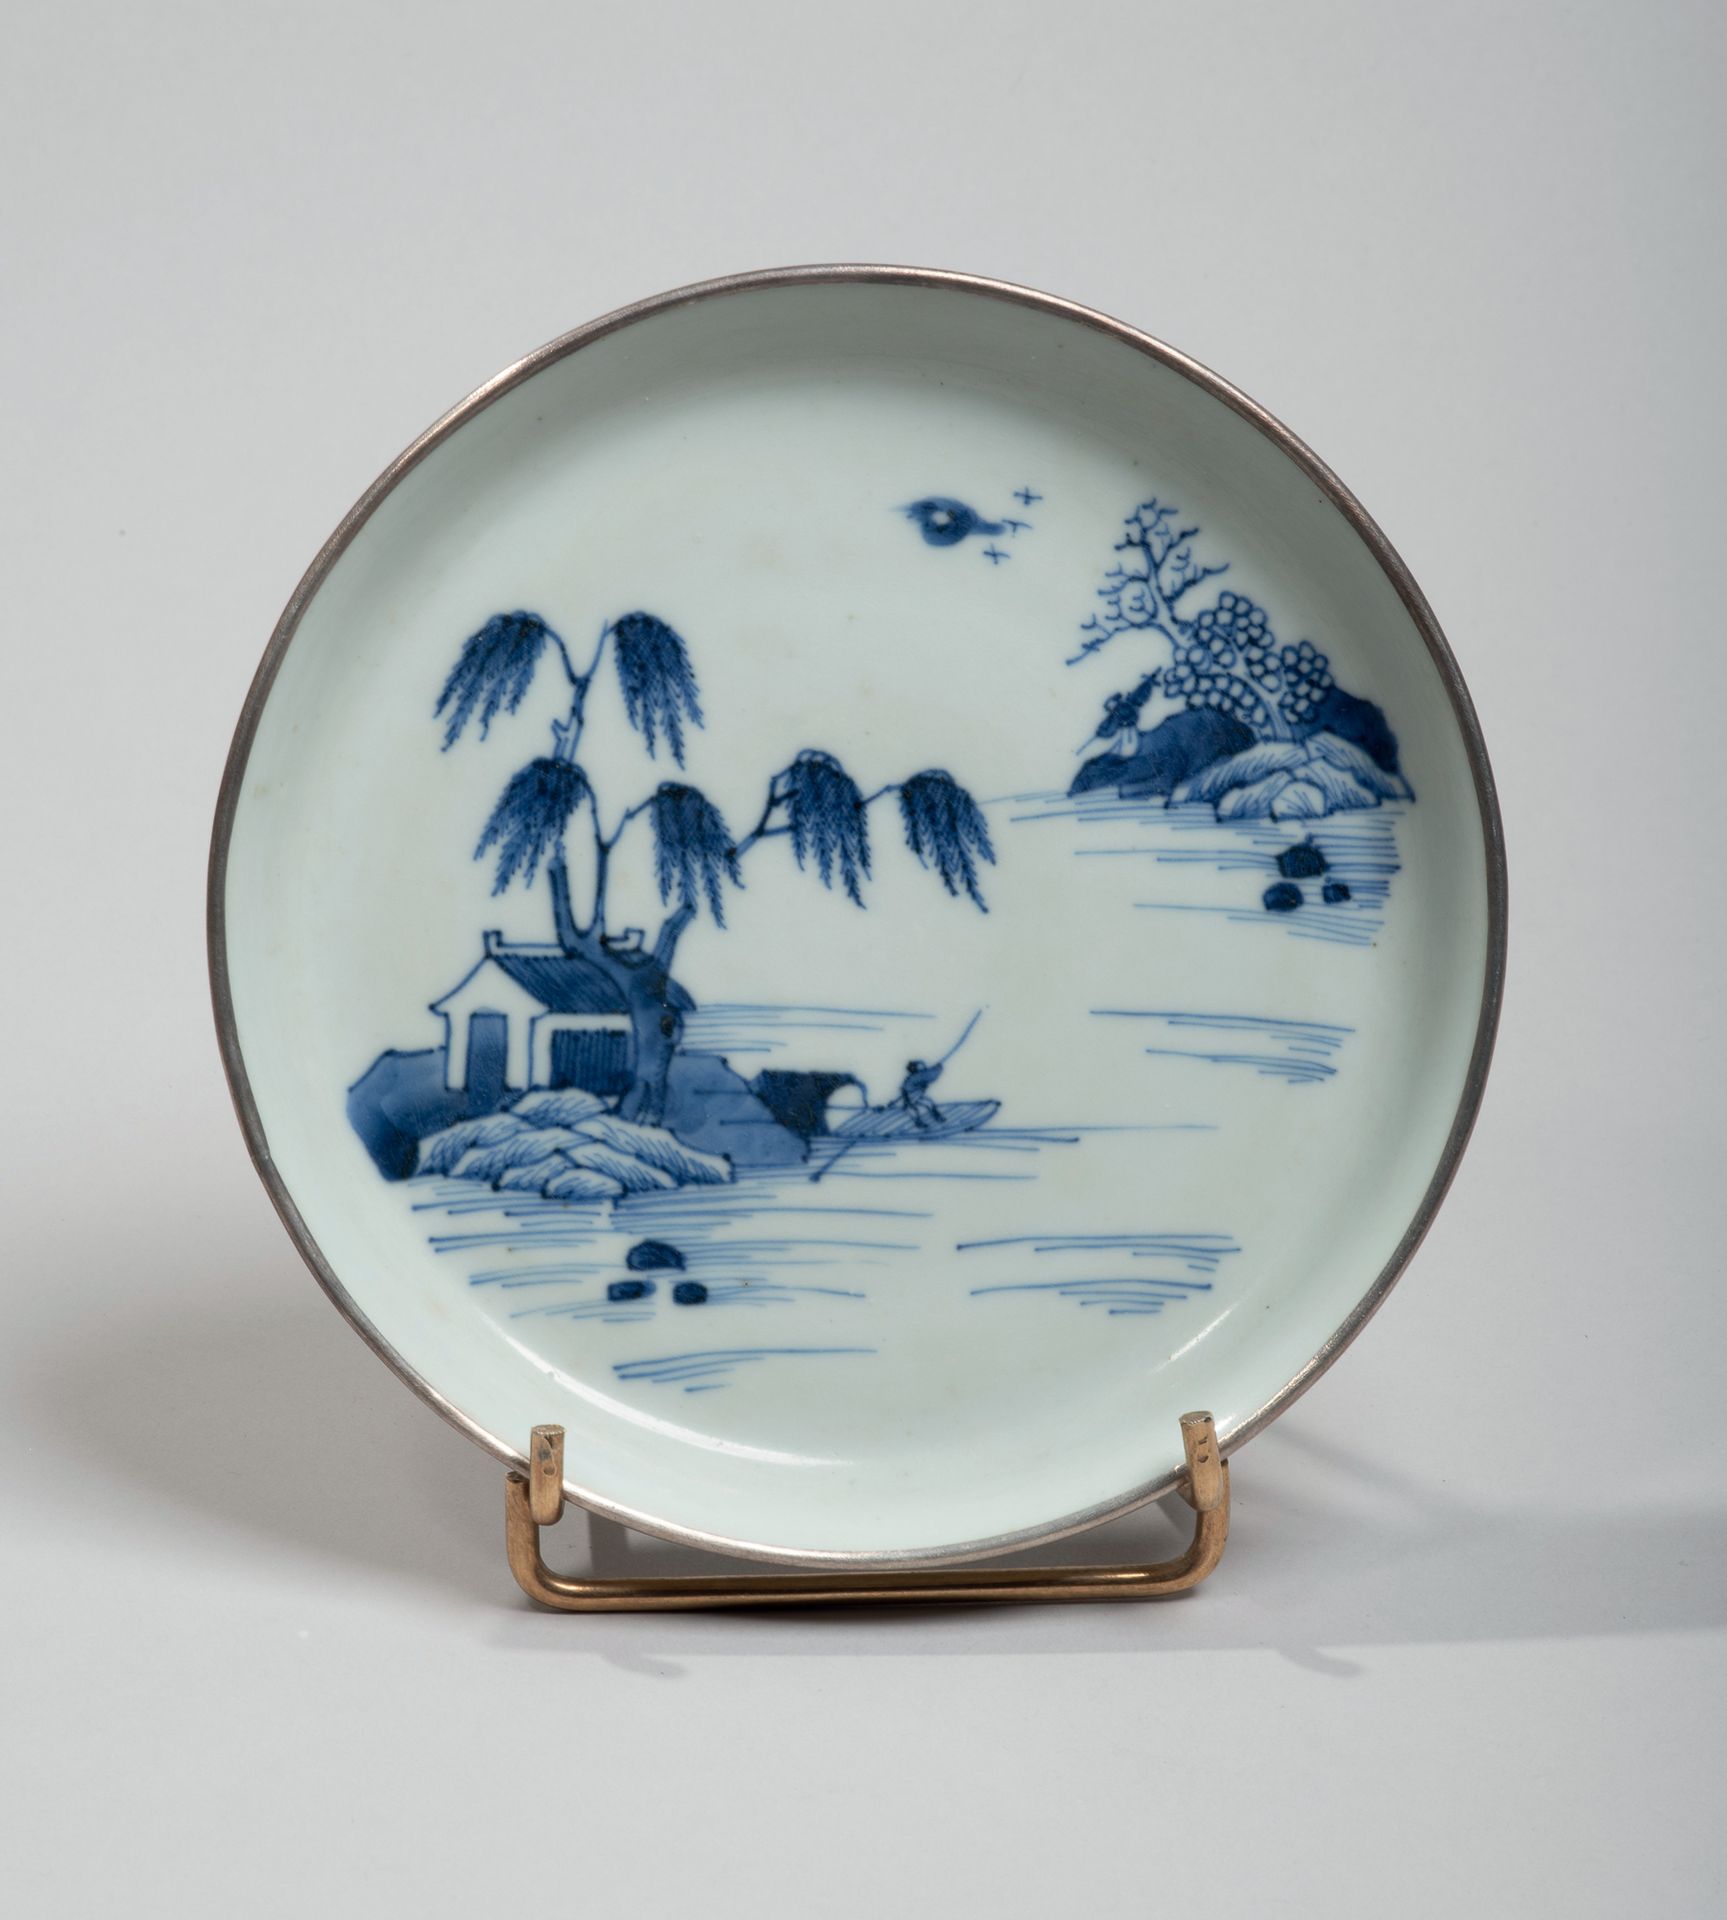 VIETNAM- XVIIIe/XIXe siècle 
瓷碗以釉下蓝色装饰，在湖景中的岸边有渔民。背面有chính ngoc（真玉）标记。
直径15.5厘米